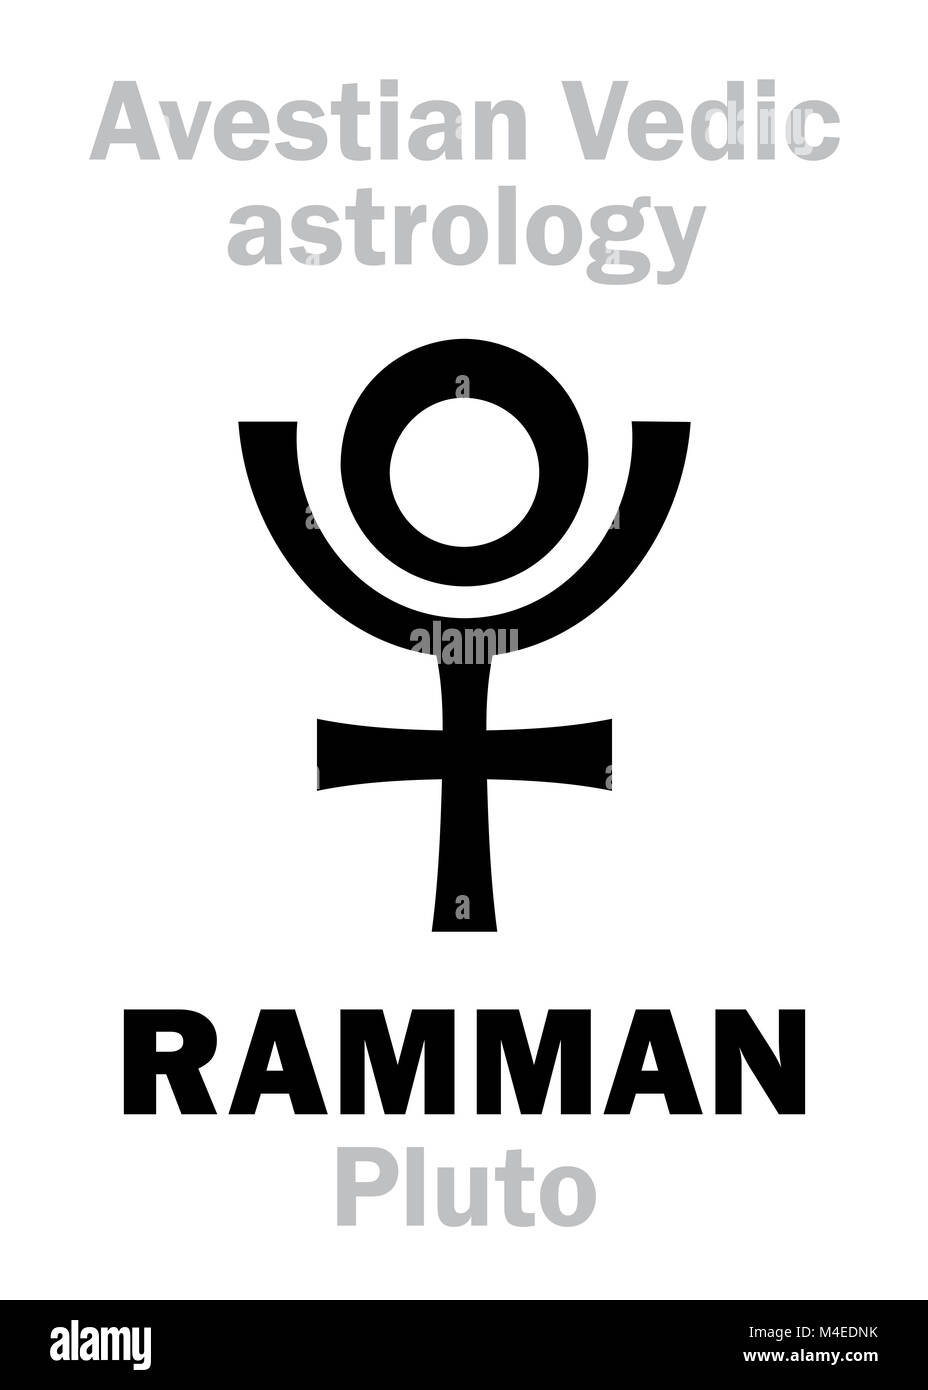 Astrology: planet RAMMAN / Haddad (Pluto) Stock Photo